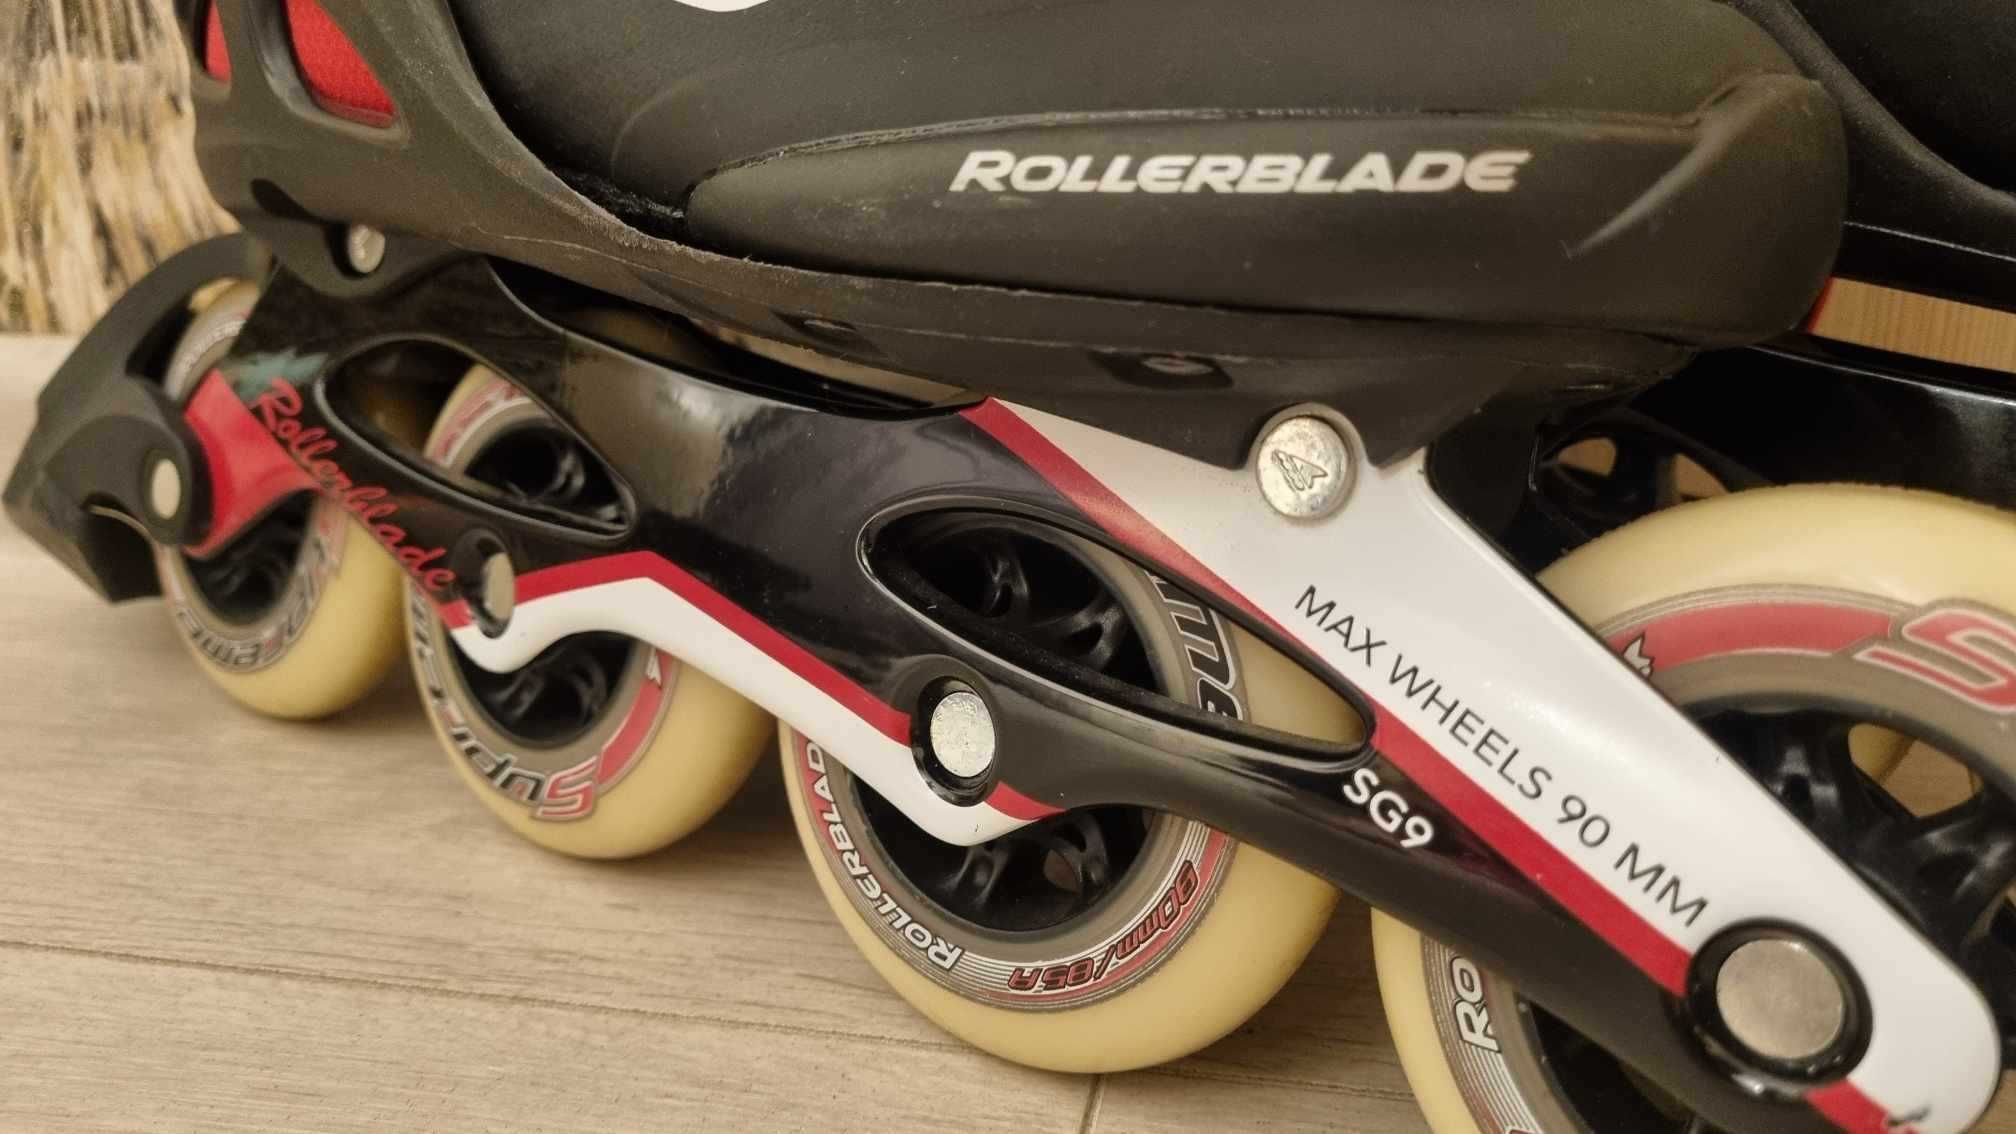 ROLE Rollerblade